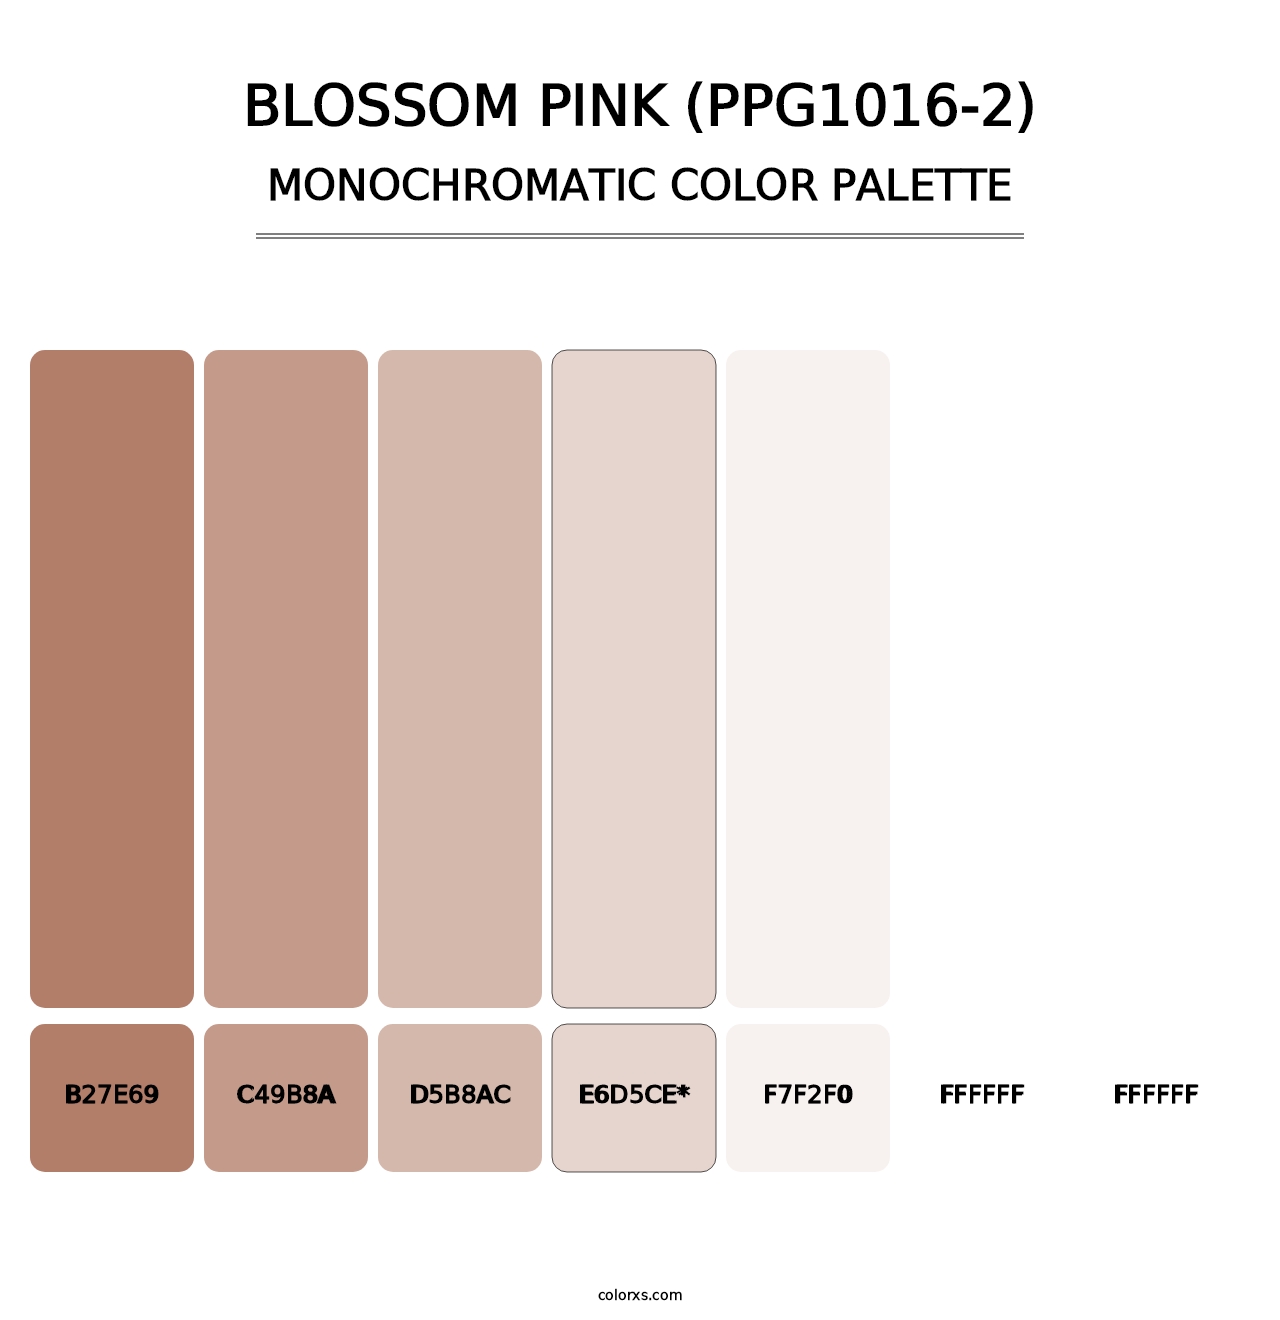 Blossom Pink (PPG1016-2) - Monochromatic Color Palette